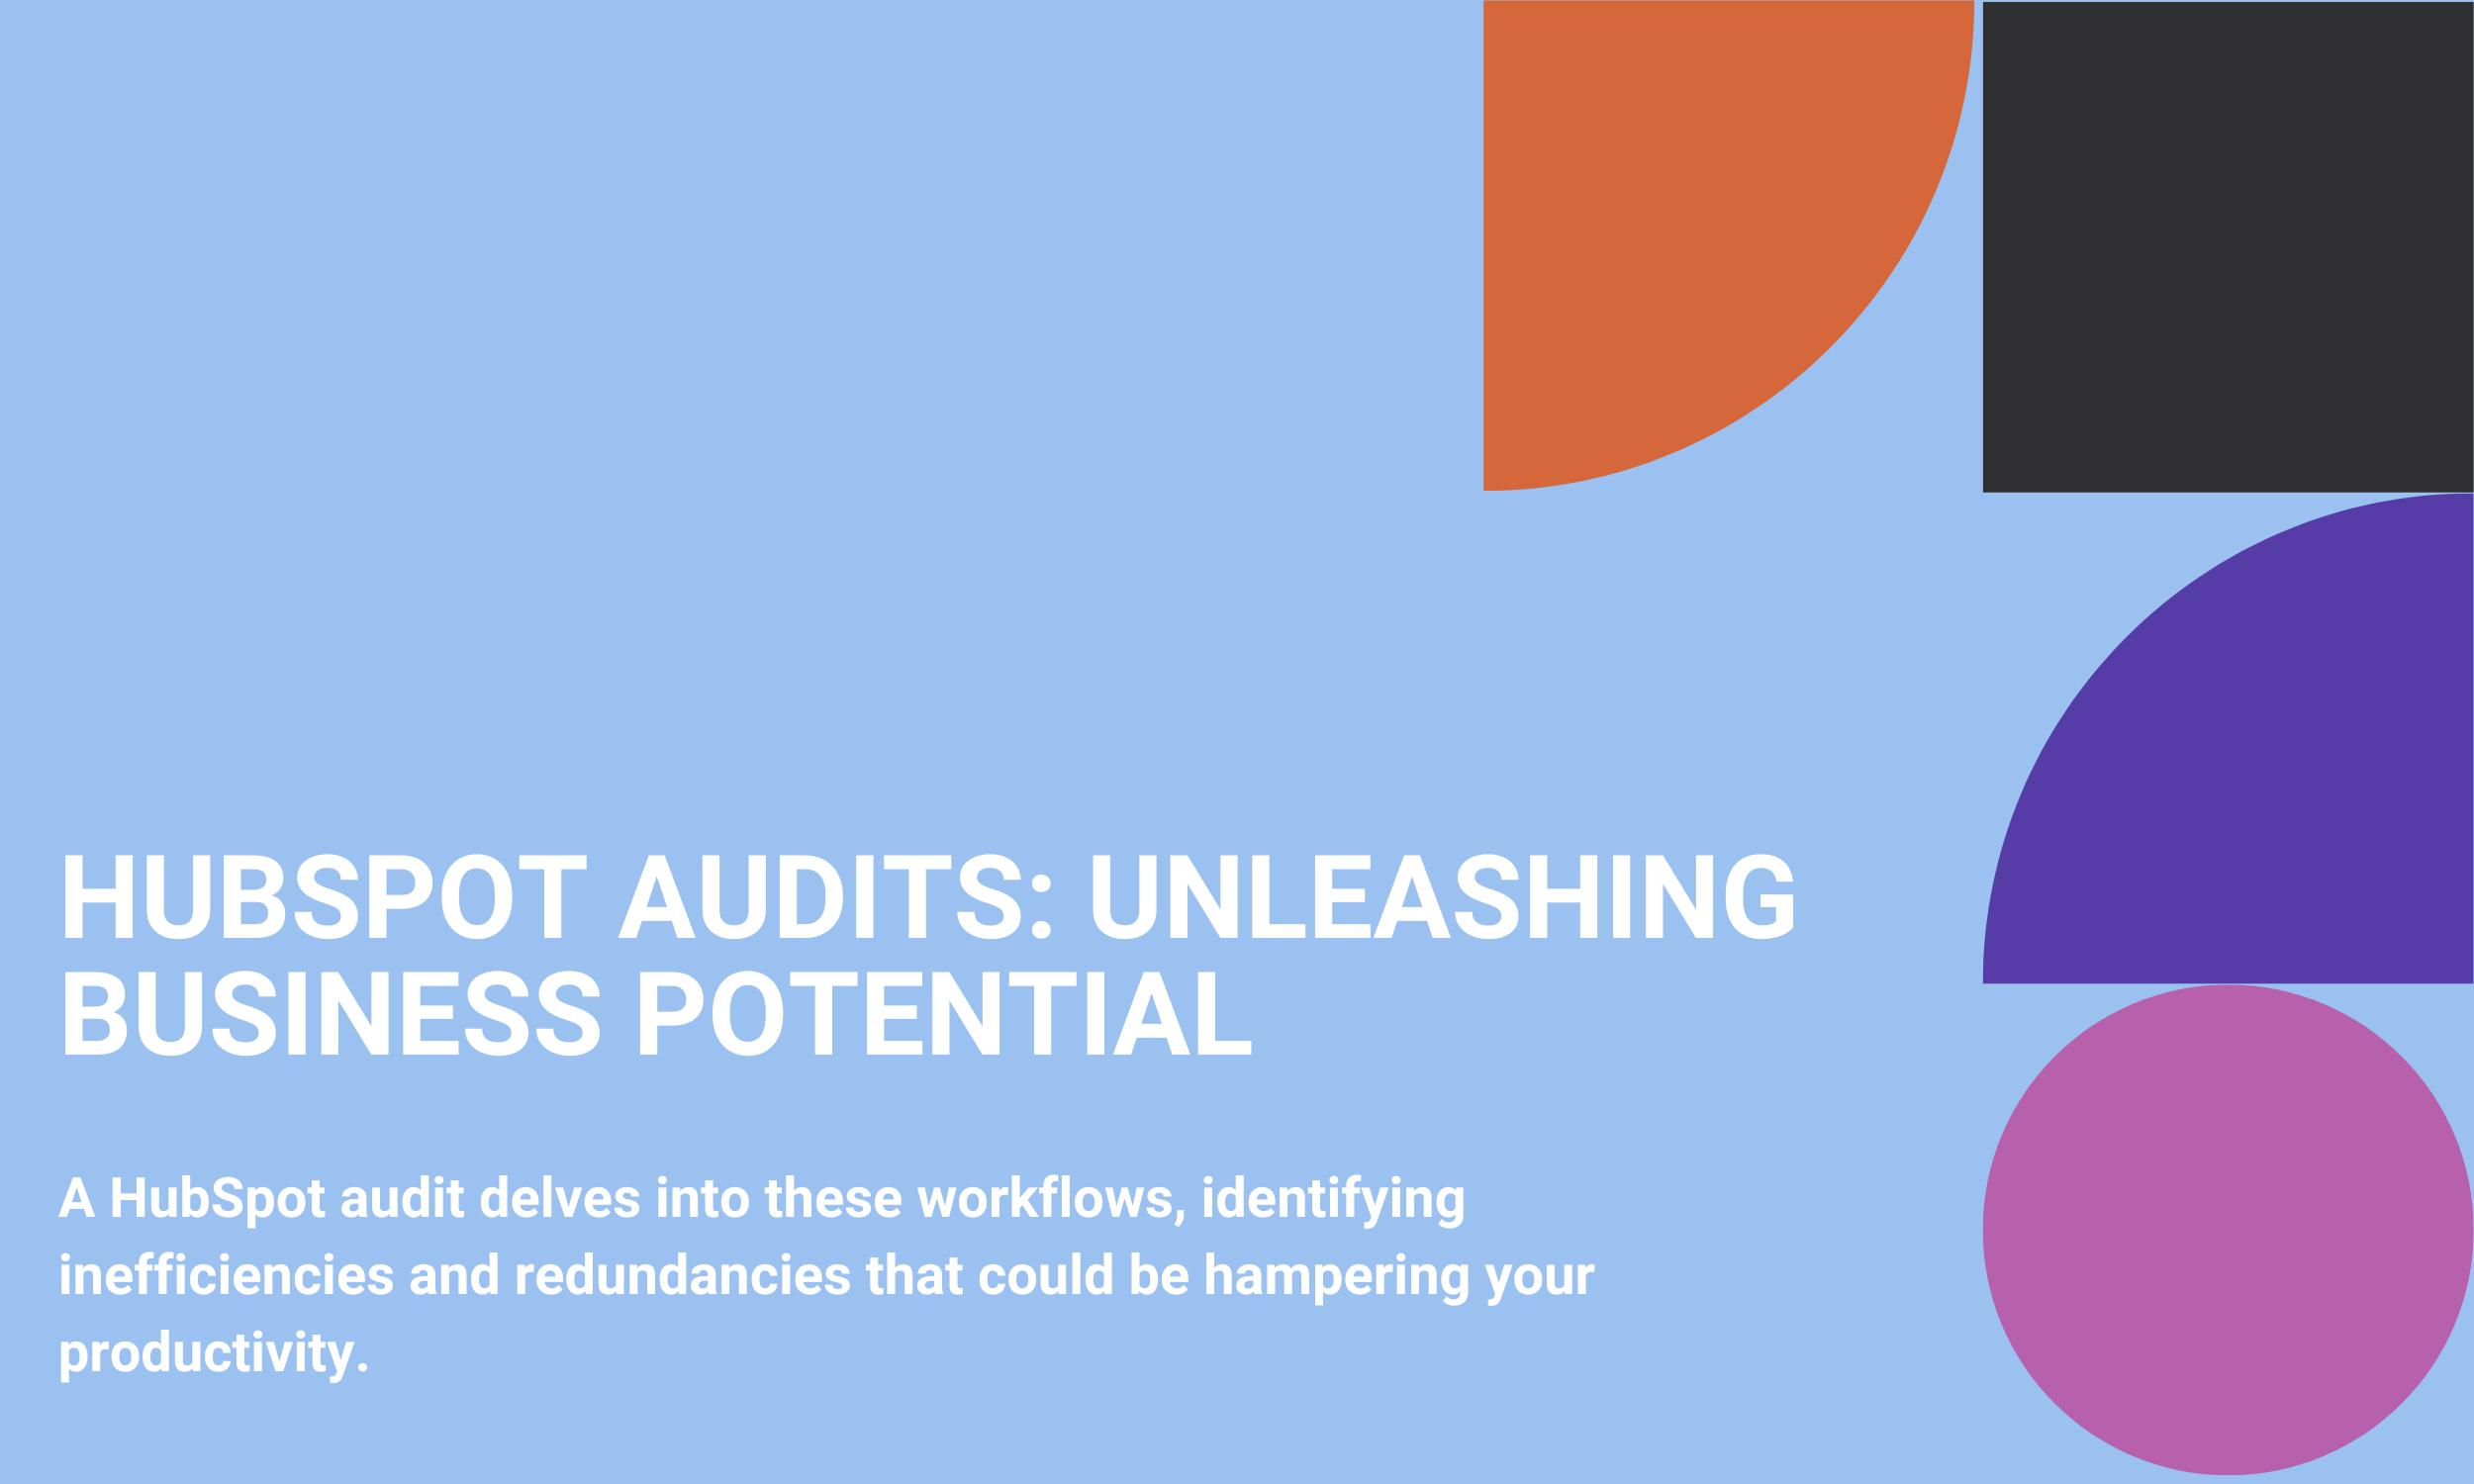 HubSpot Audits: Unleashing Business Potential